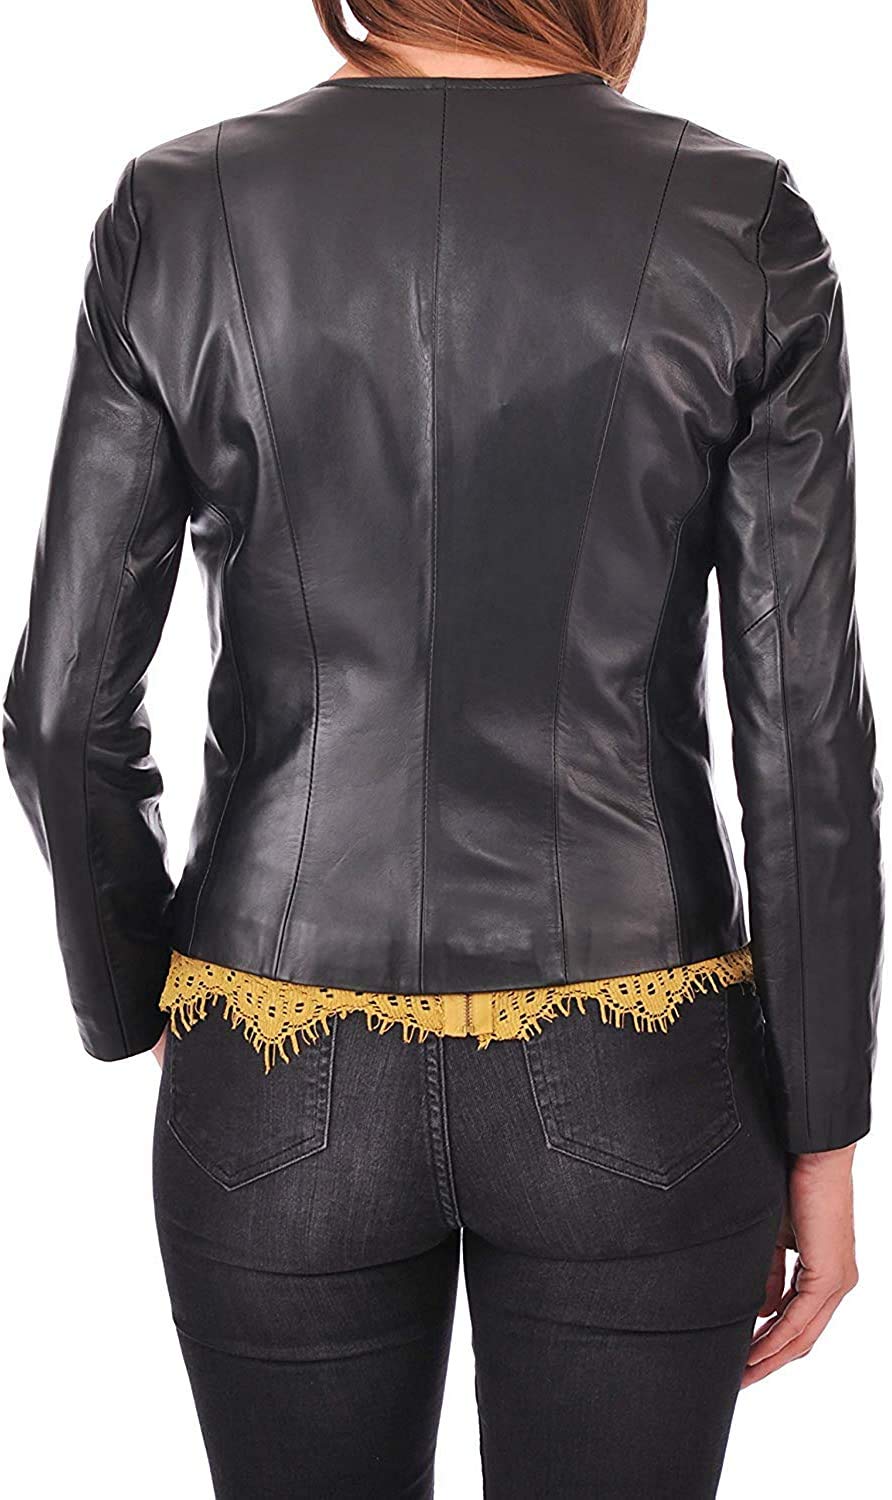 100% Leather Jacket for Women - Collarless Deep Neck & Slim Fit - Moto, Bomber, Biker Winter Casual Wear